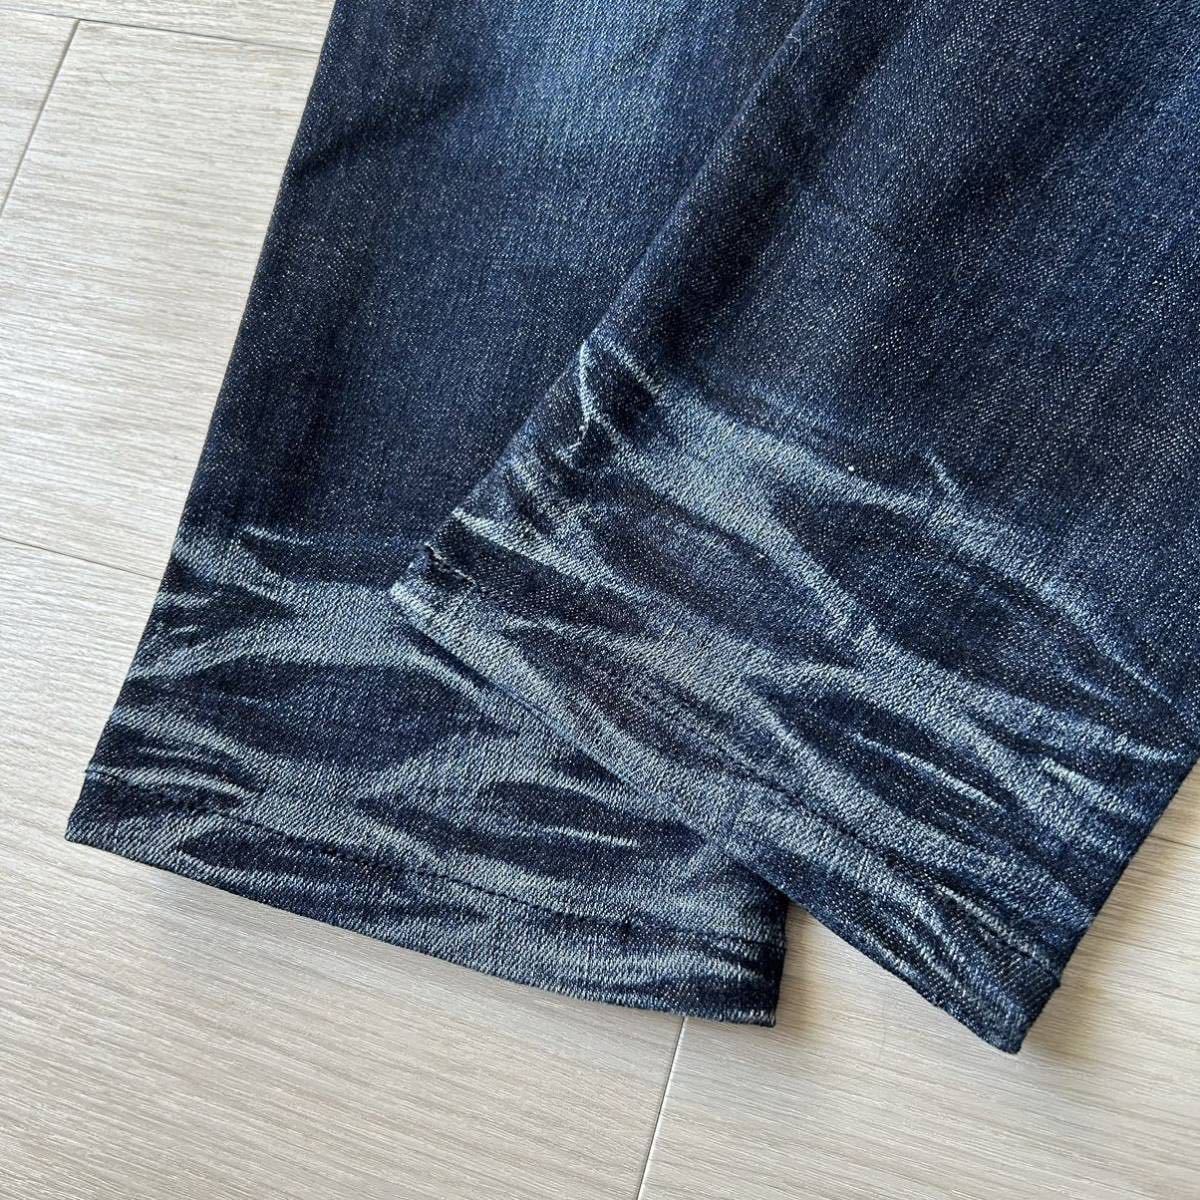 Rare 00s Japanese Label Semantic Design Weathered Denim Pants Flare Jeans Y2K archive lgb tornadomart goa ifsixwasnine kmrii_画像7